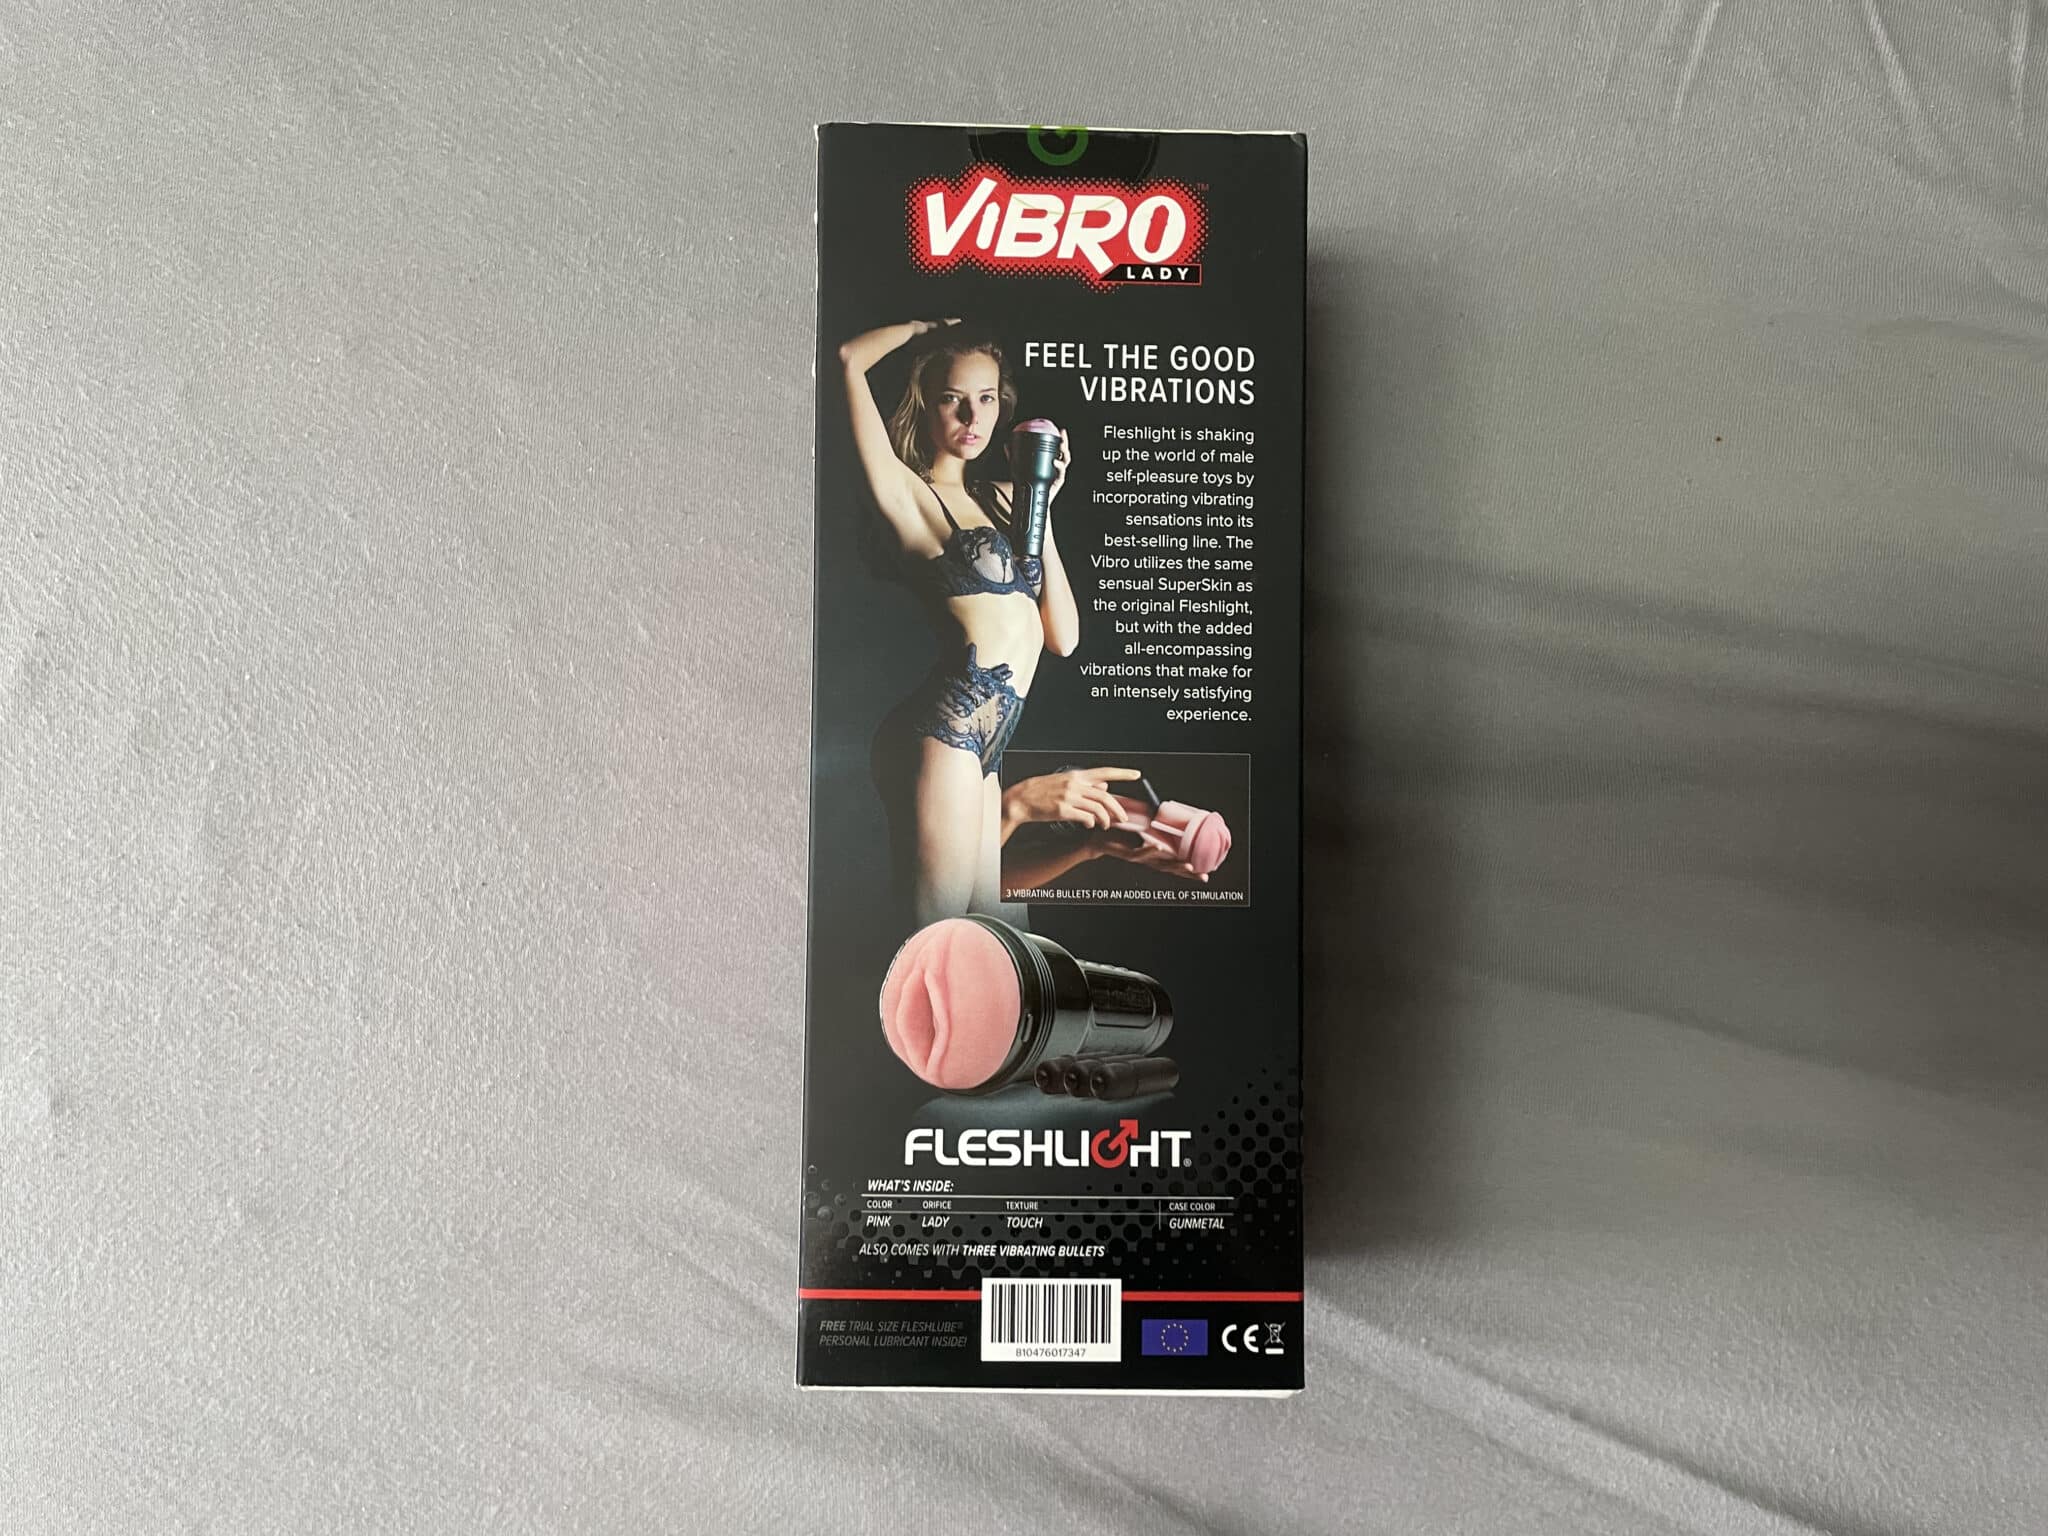 Fleshlight Vibro Unpacking the Quality of the Fleshlight Vibro